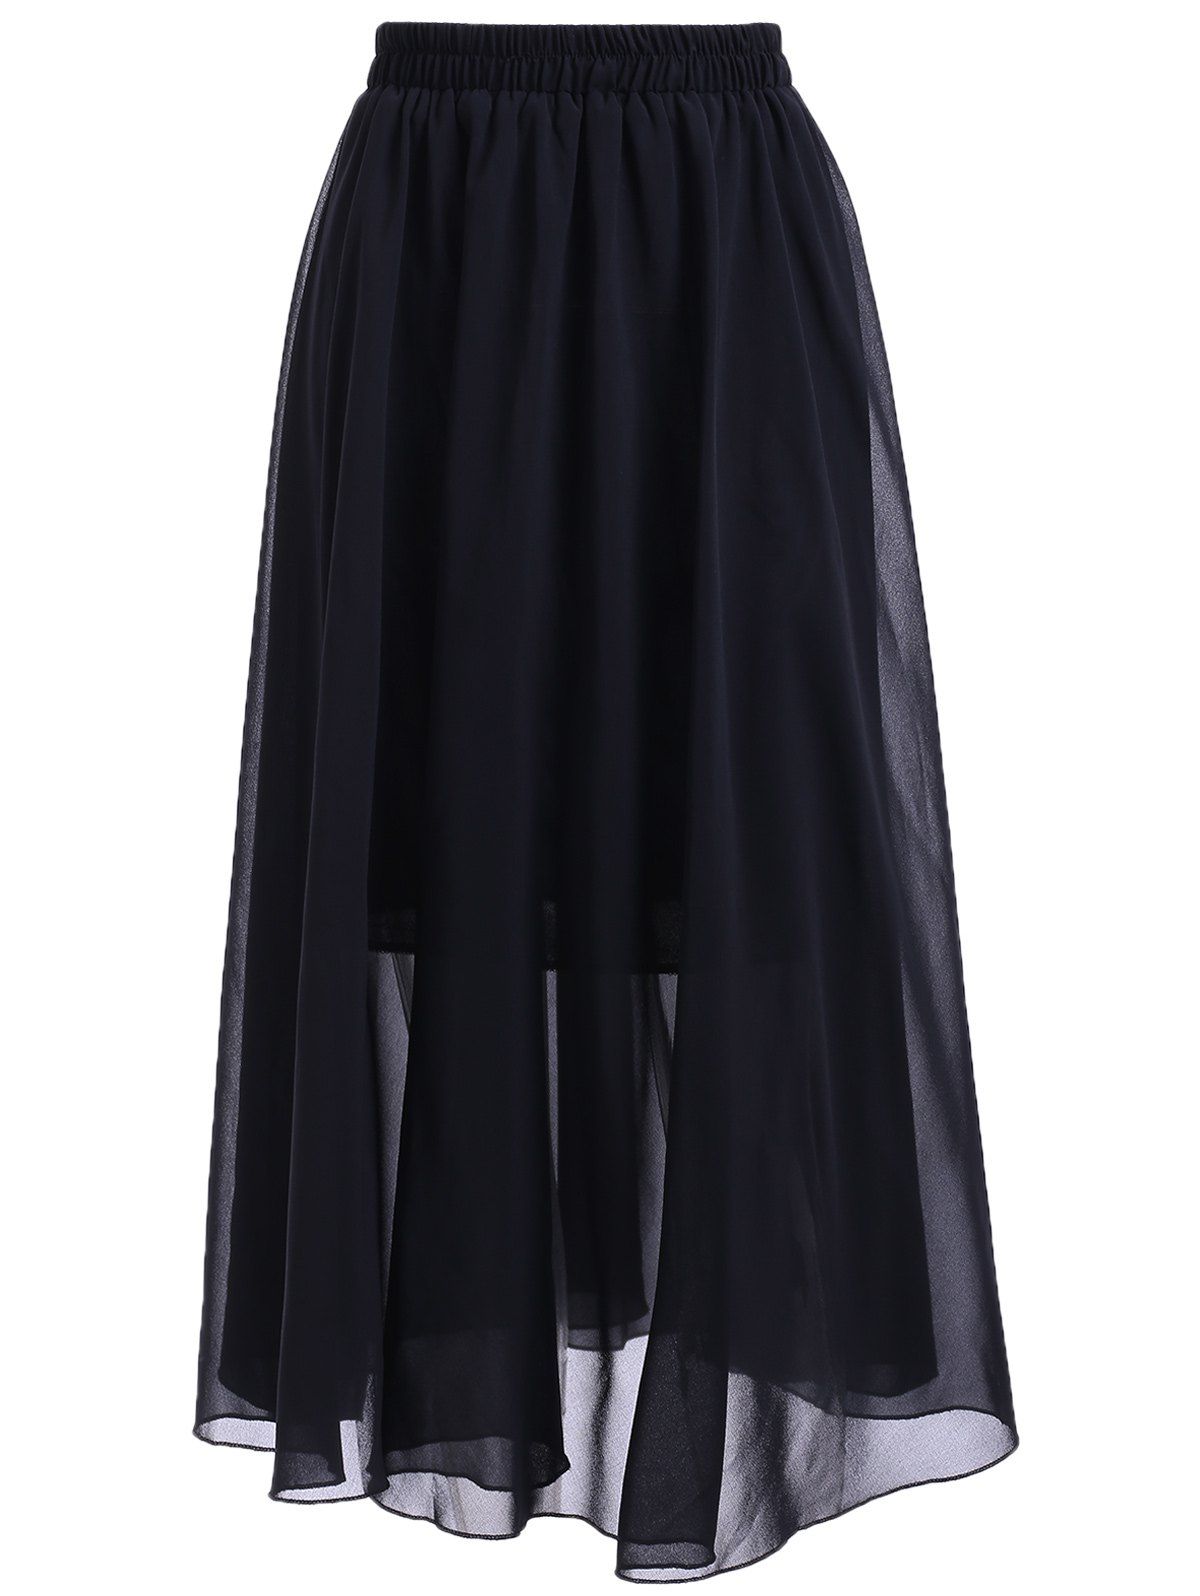 Shops Fashionable Black Elastic Waist Chiffon Women's Skirt  